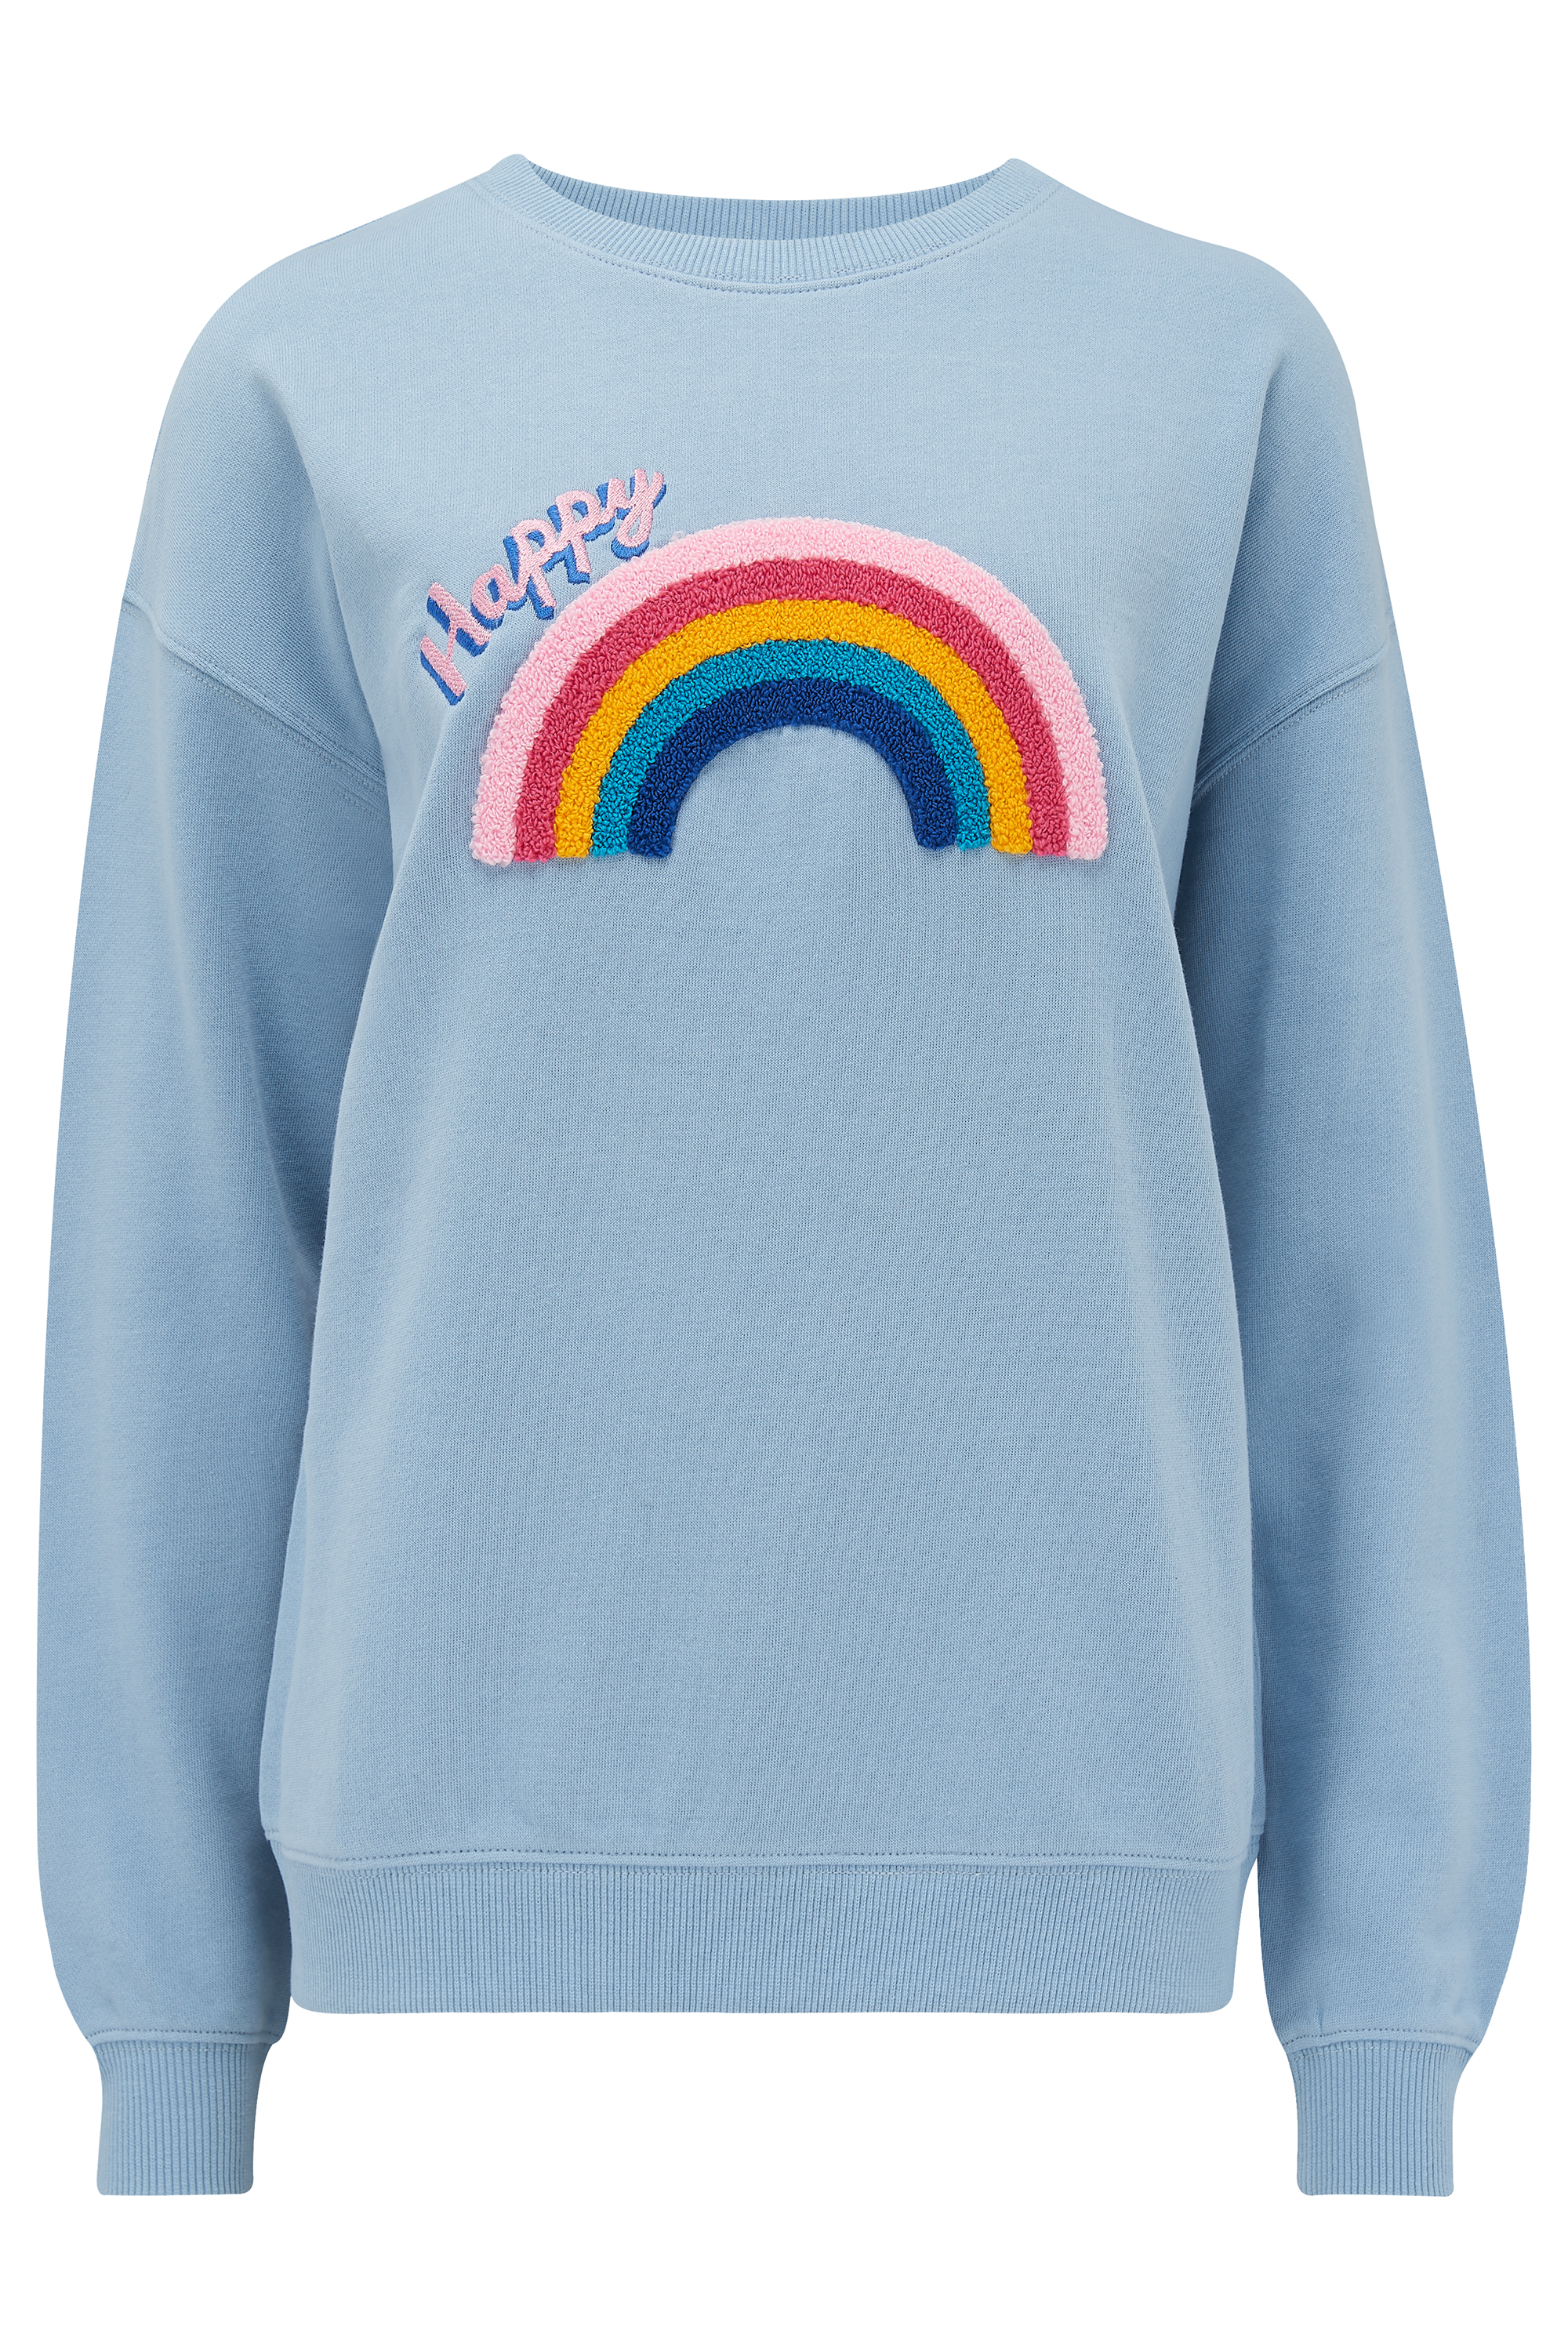 Sugarhill Brighton Noah Sweatshirt - Dusky Blue, Happy Rainbow